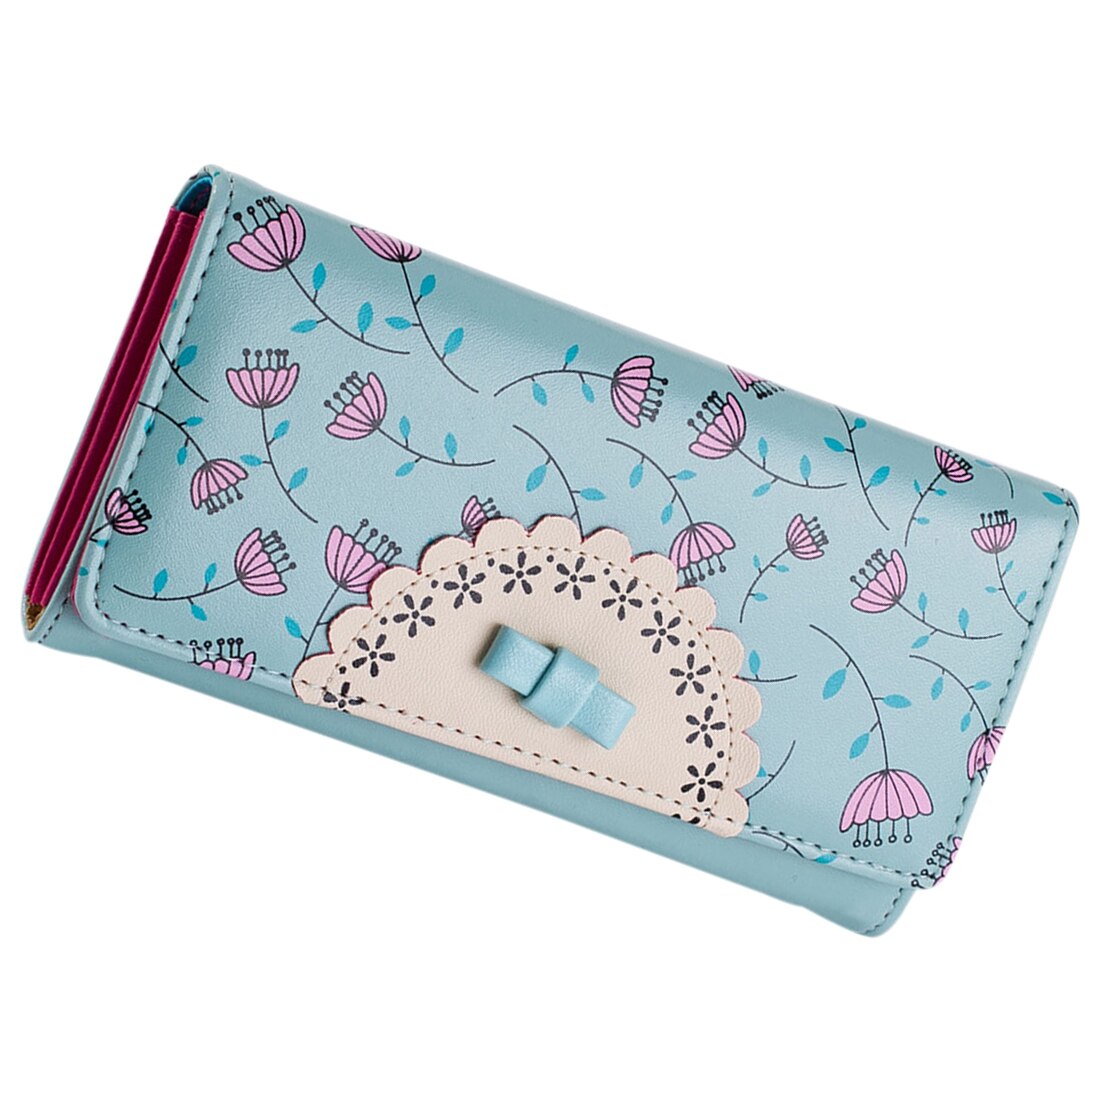 Wallet for women wallets brands purse dollar price printing designer purses card holder coin bag female - ebowsos